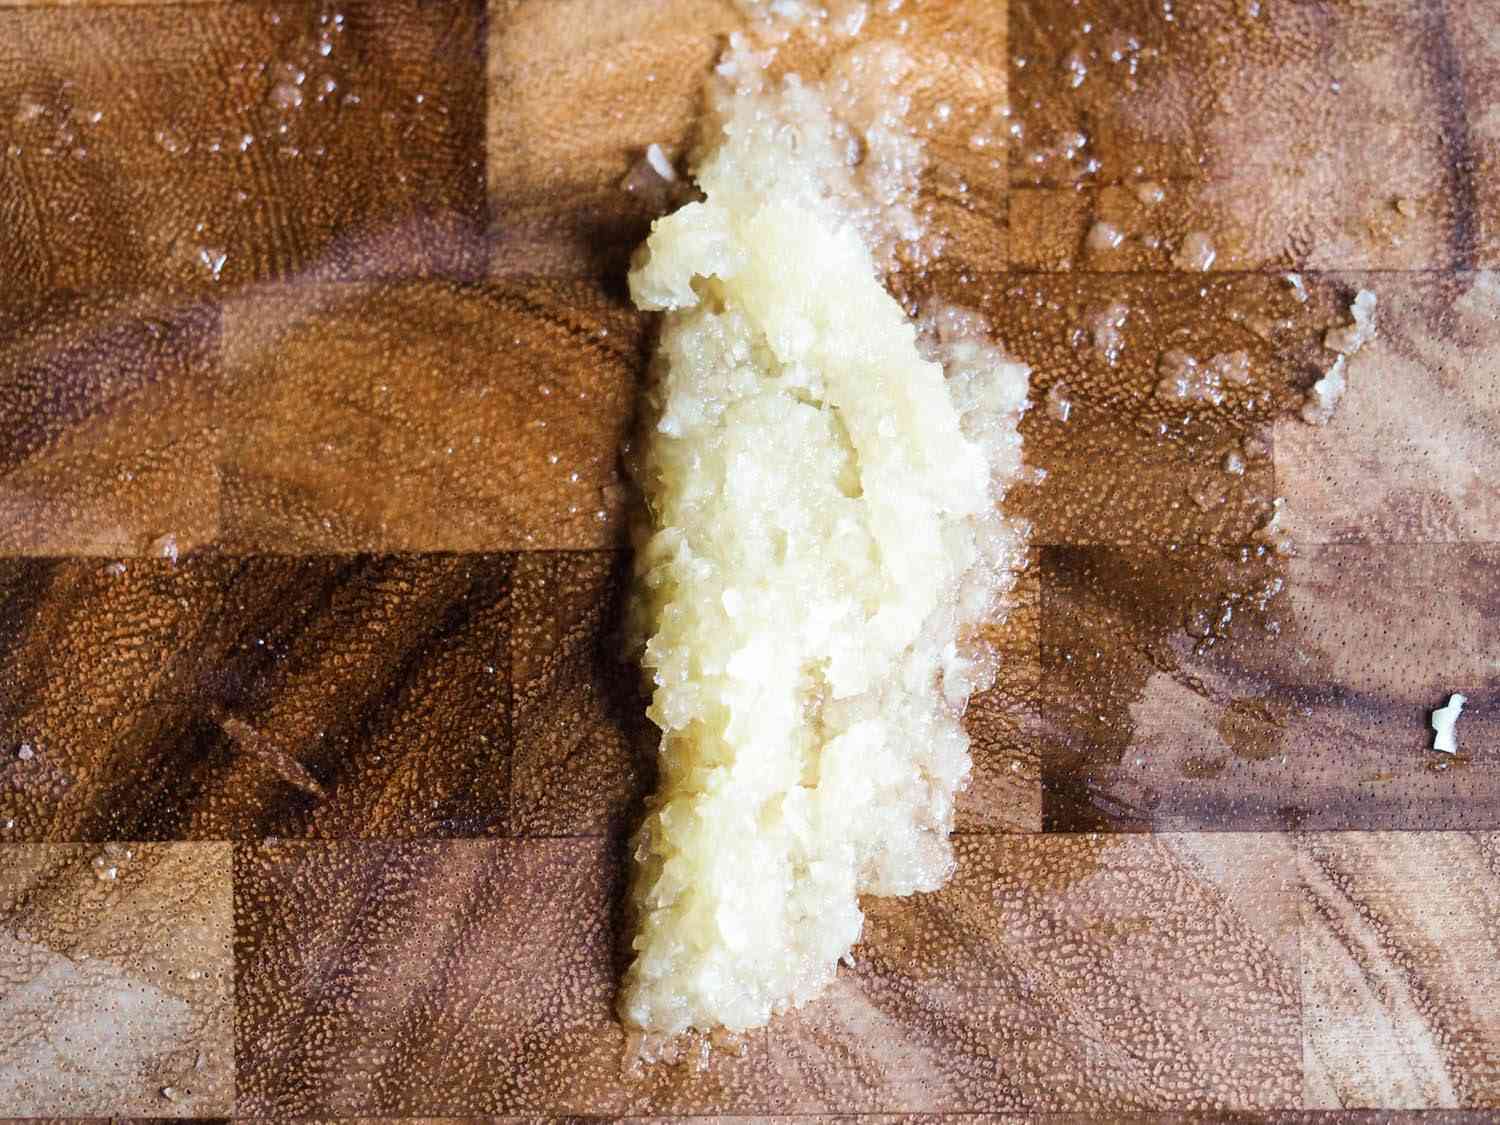 Knife-blade pureed garlic on a cutting board.